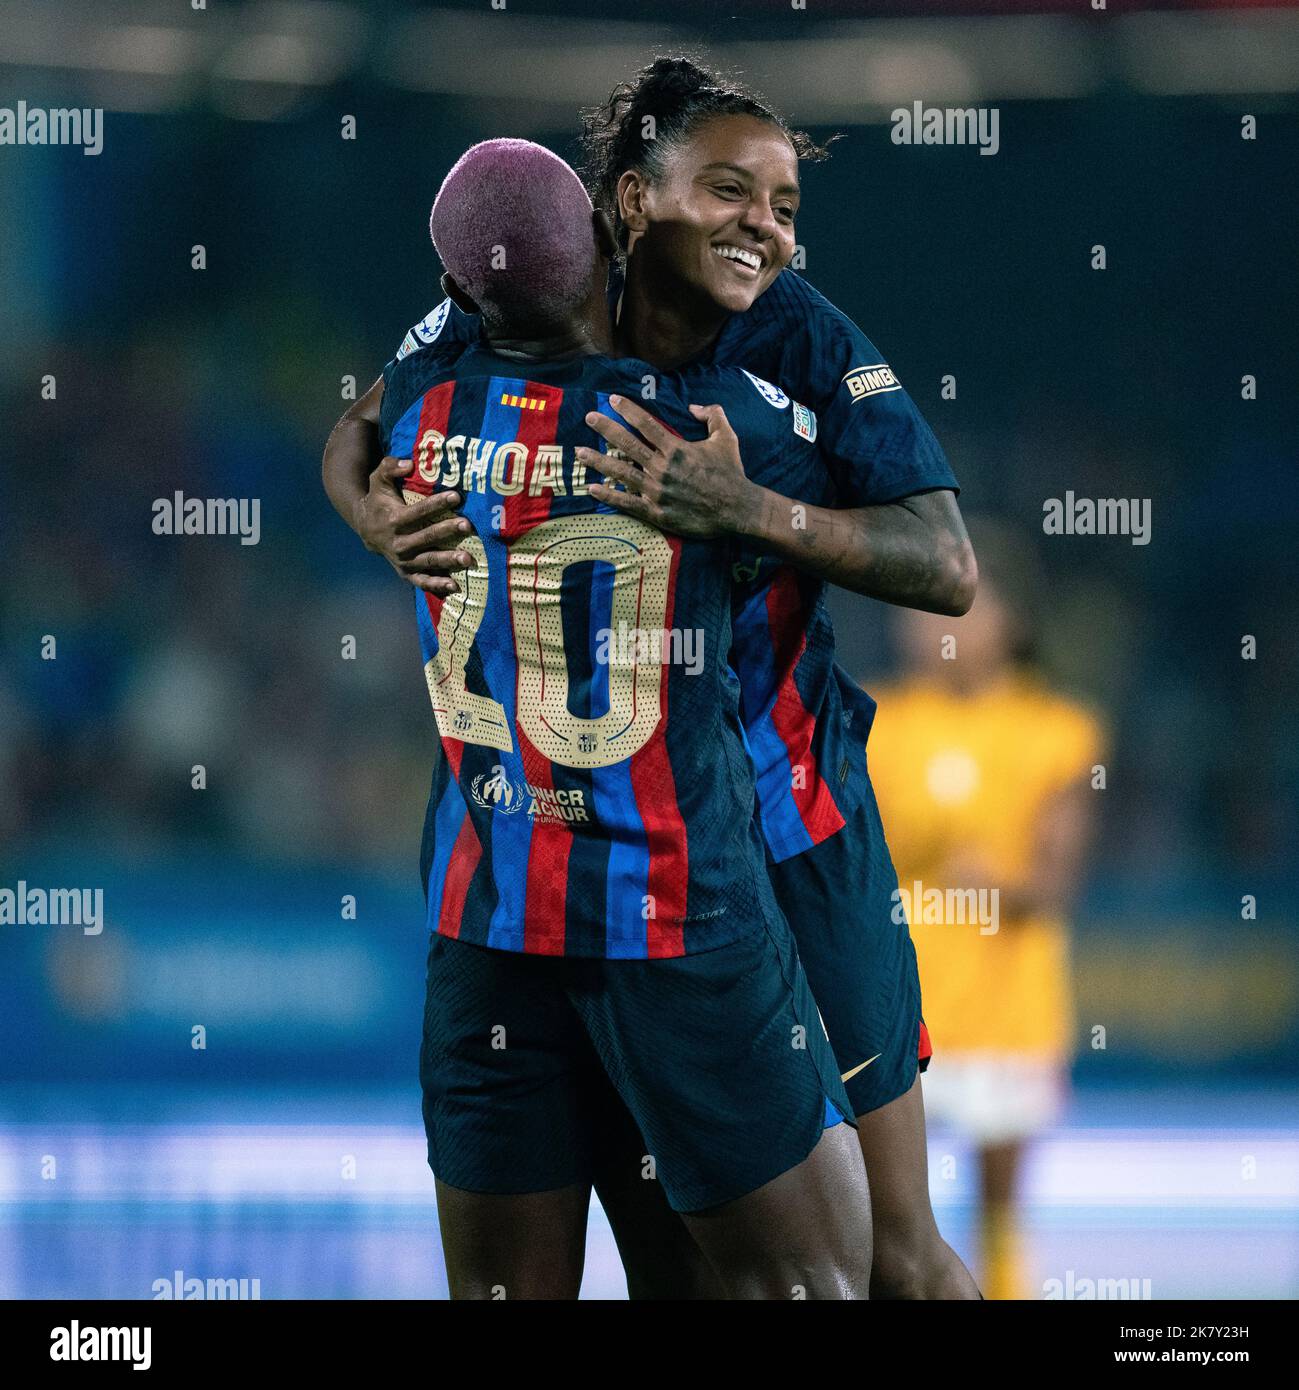 Barcelona, Spanien, 19, Oktober 2022. Spanien-Football-Women's Champions League FC Barcelona gegen SL Benfica Women. Quelle: Joan G/Alamy Live News Stockfoto